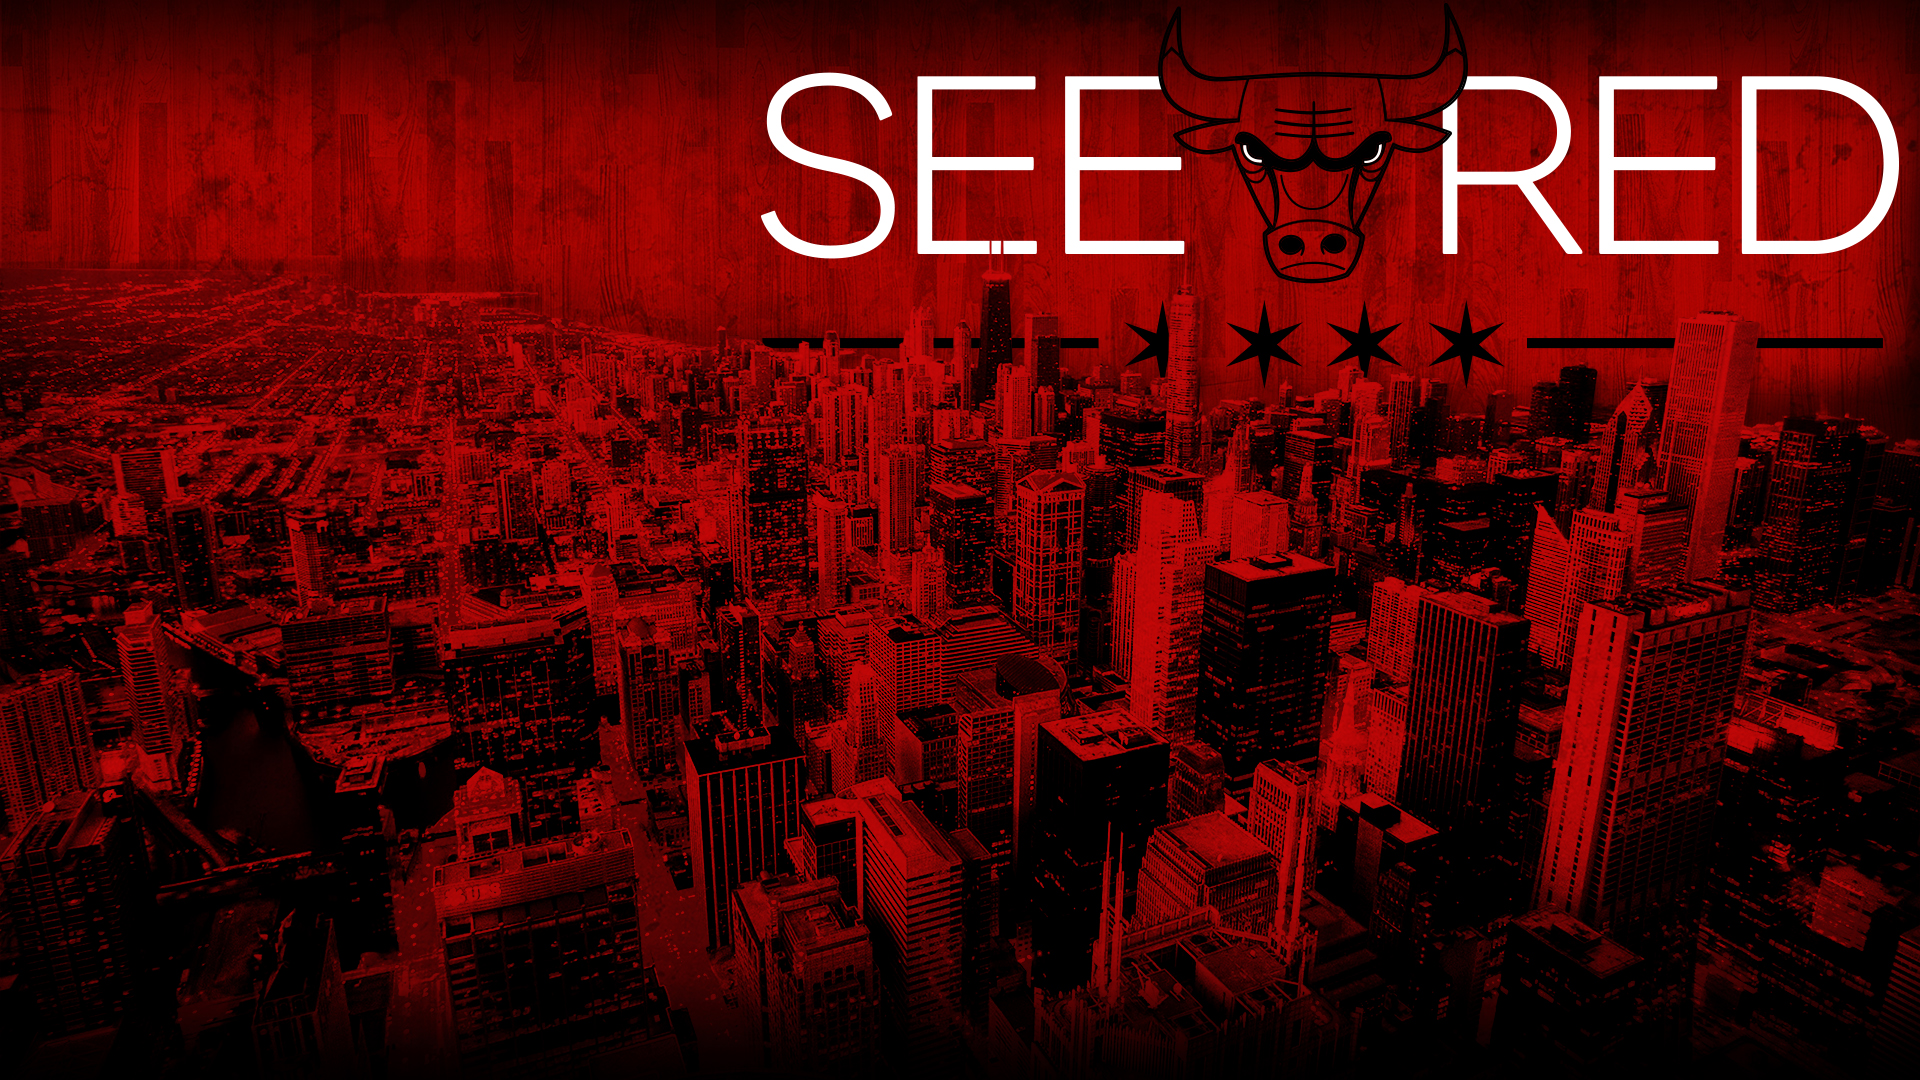 See Red Chicago Bulls Playoffs